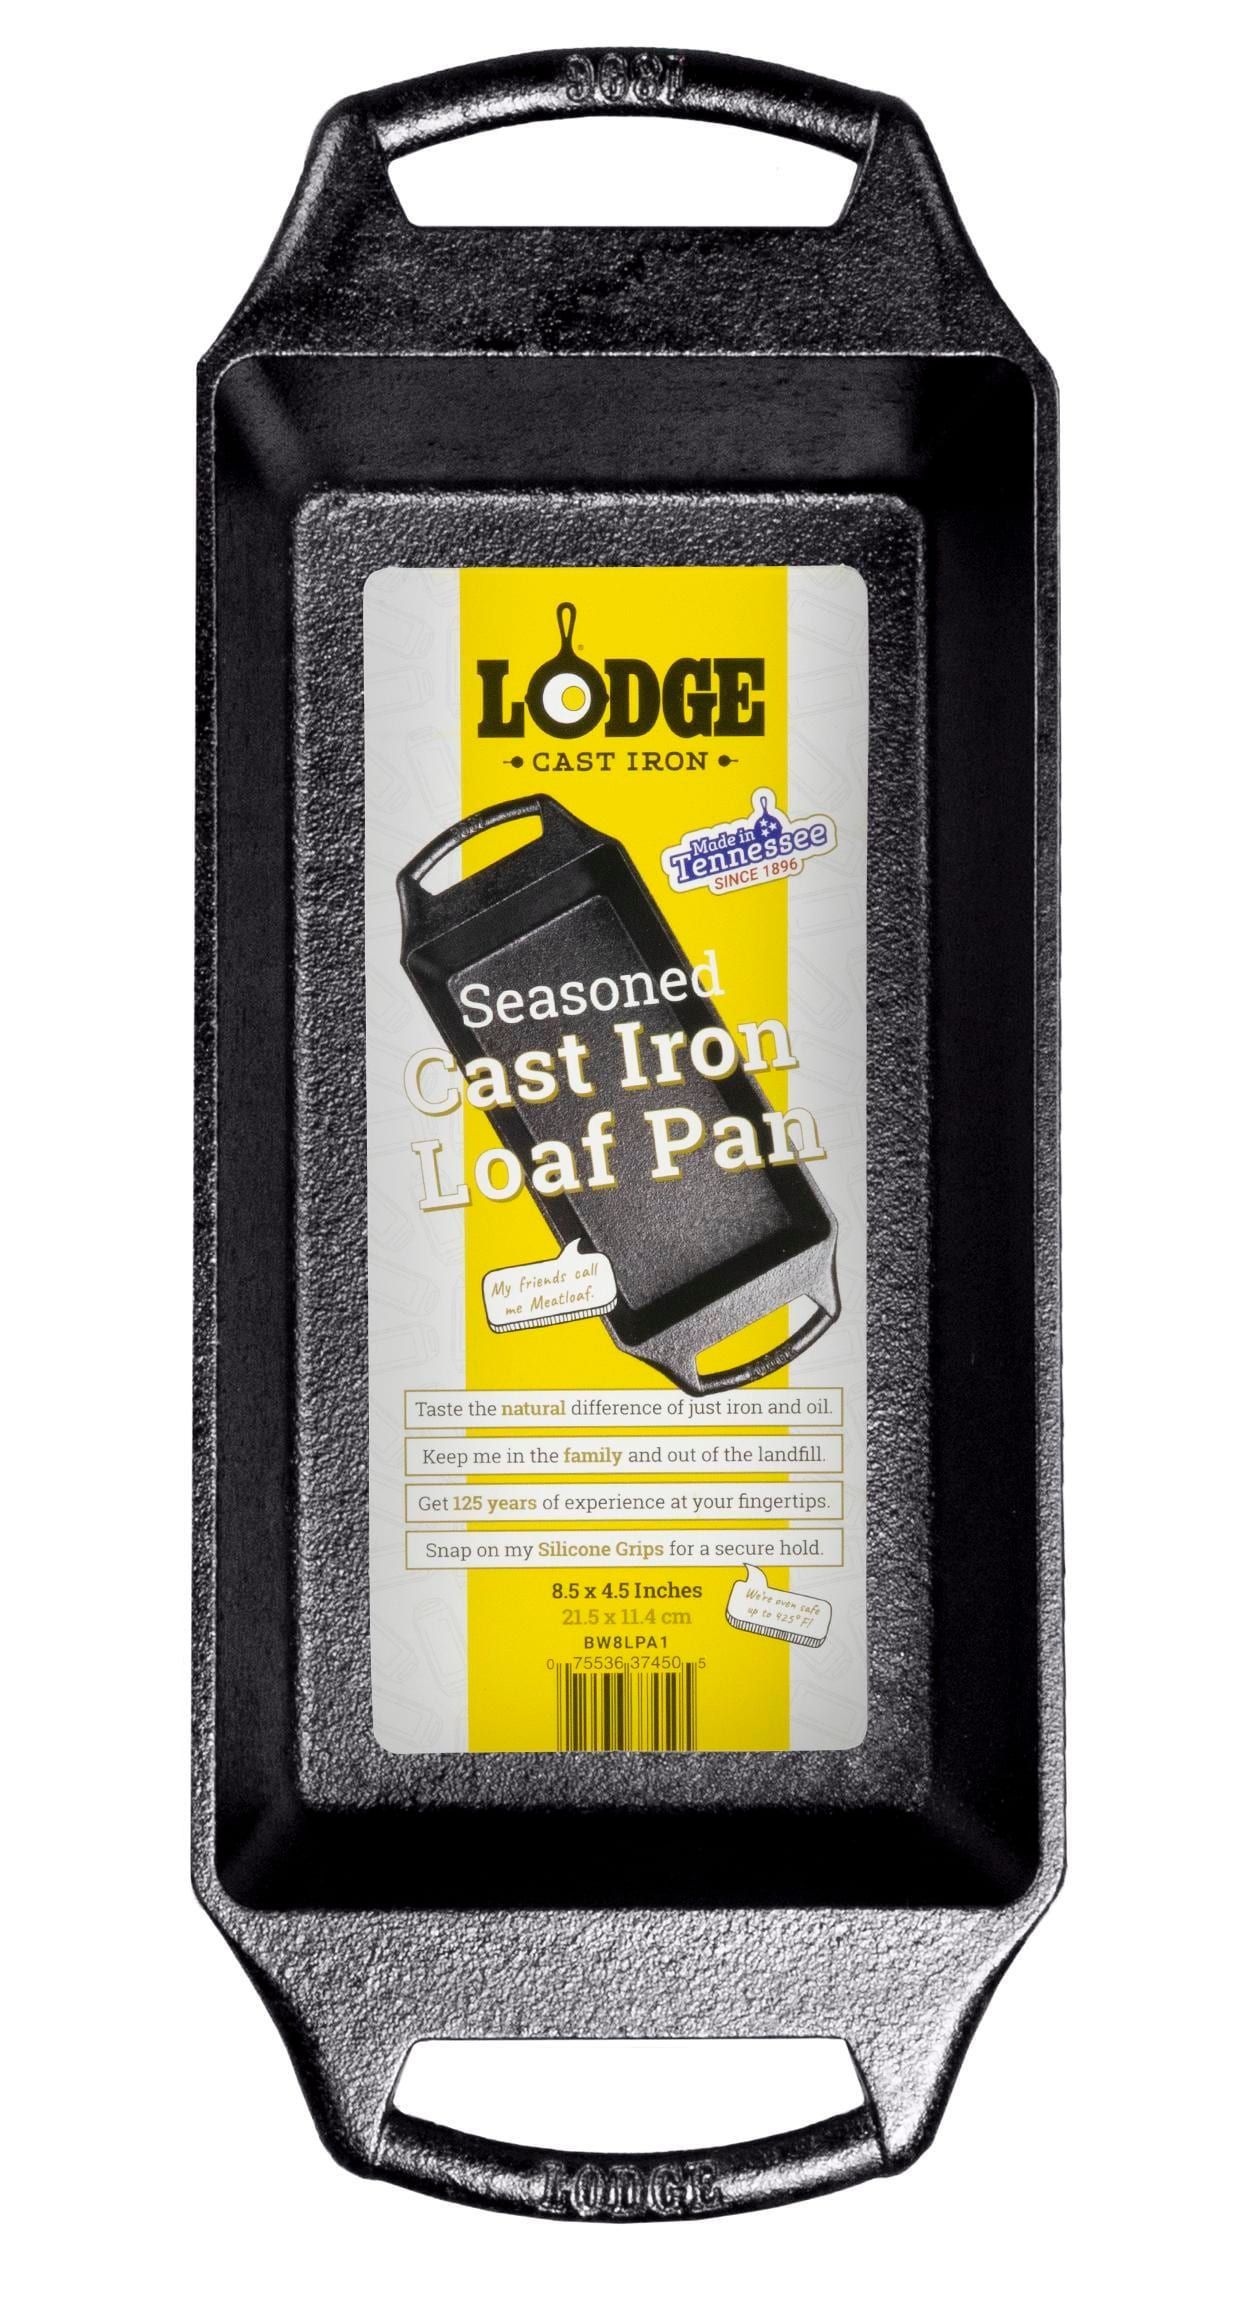 Lodge - 8.5 x 4.5 Inch Seasoned Cast Iron Loaf Pan